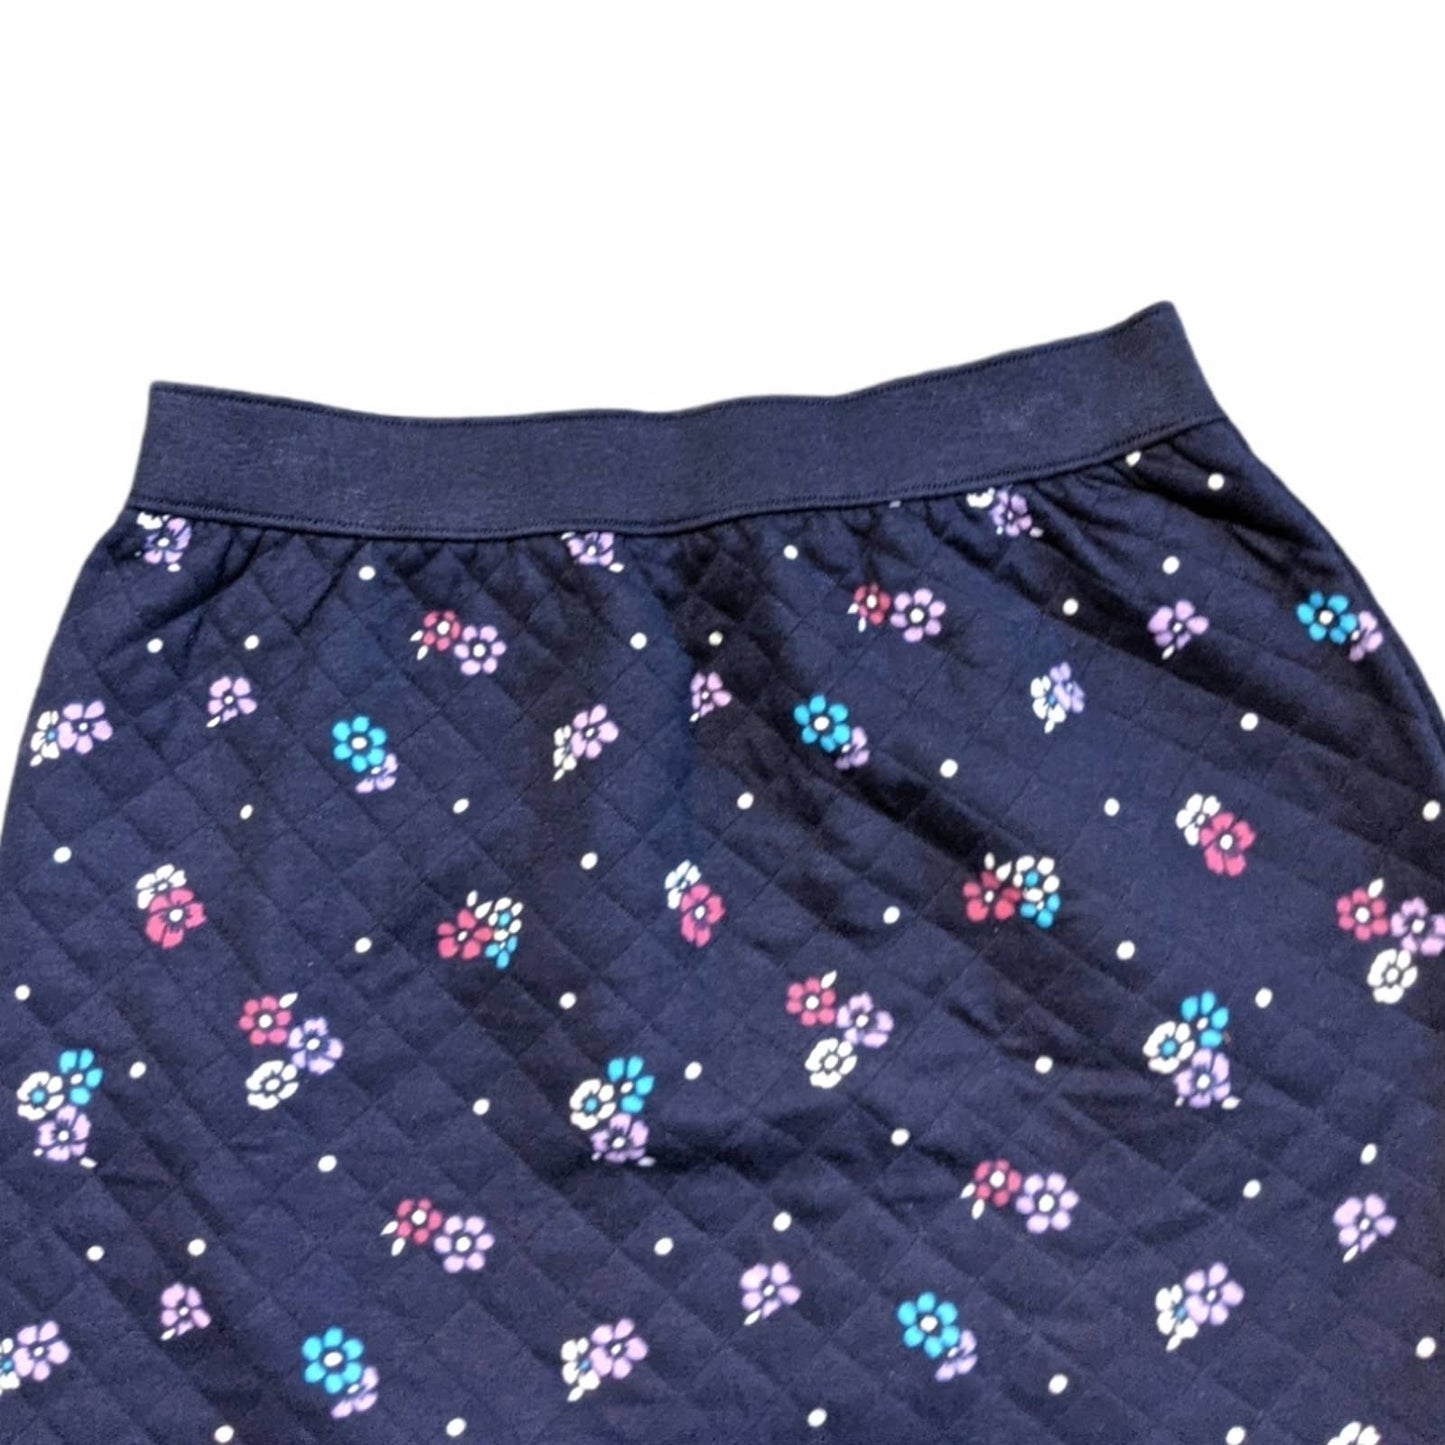 GYMBOREE Back to Blooms Navy Floral Skirt Girls 10